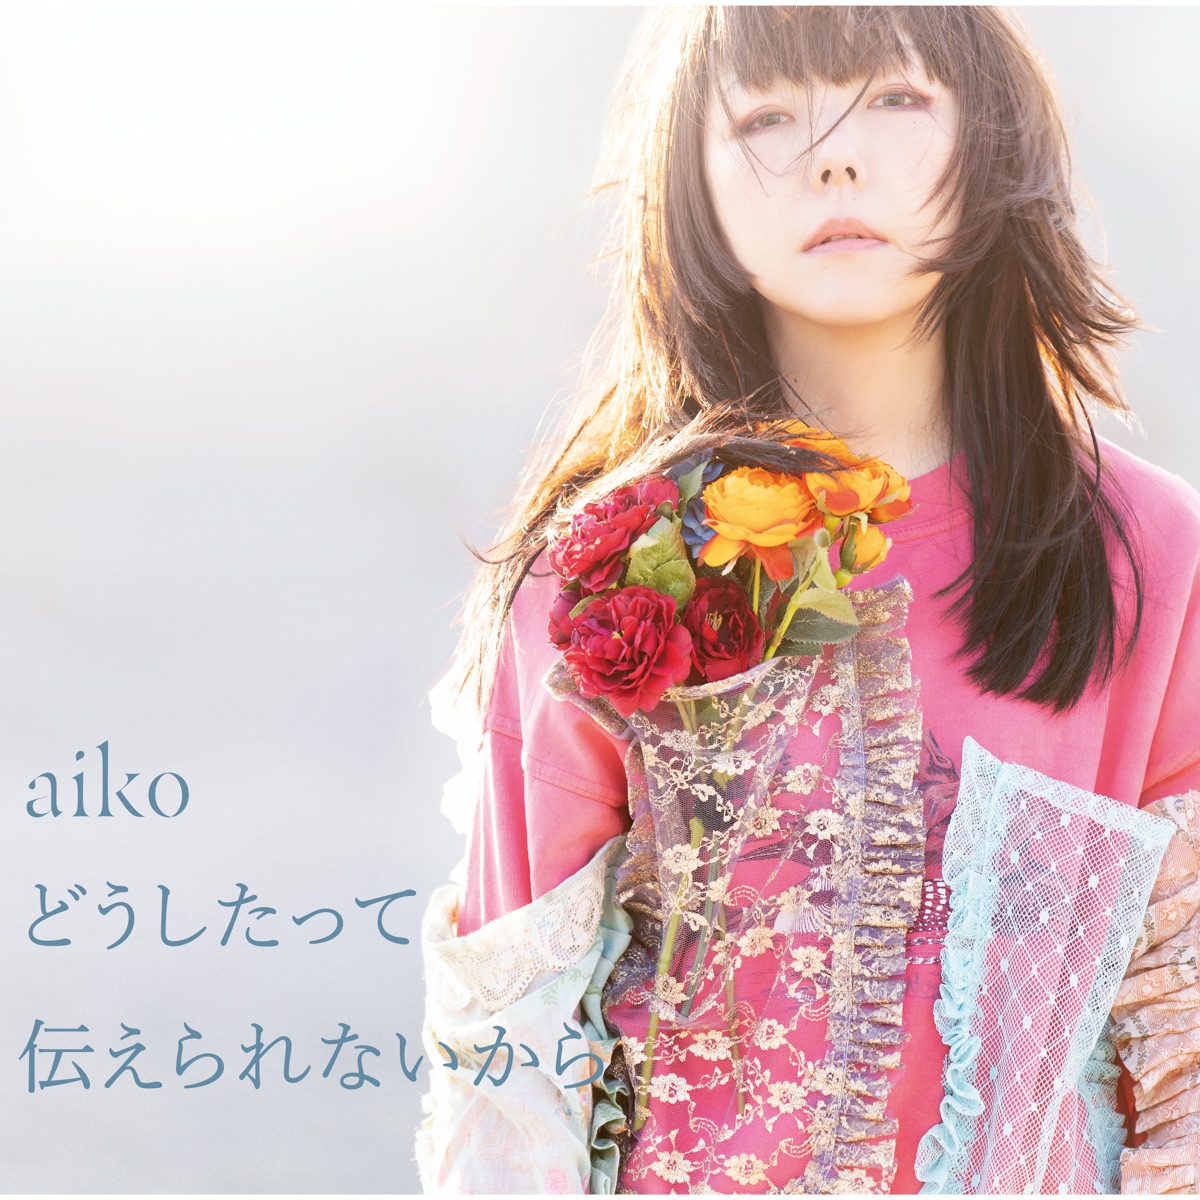 Cover art for『aiko - Melon Soda』from the release『Doushitatte Tsutaerarenaikara』